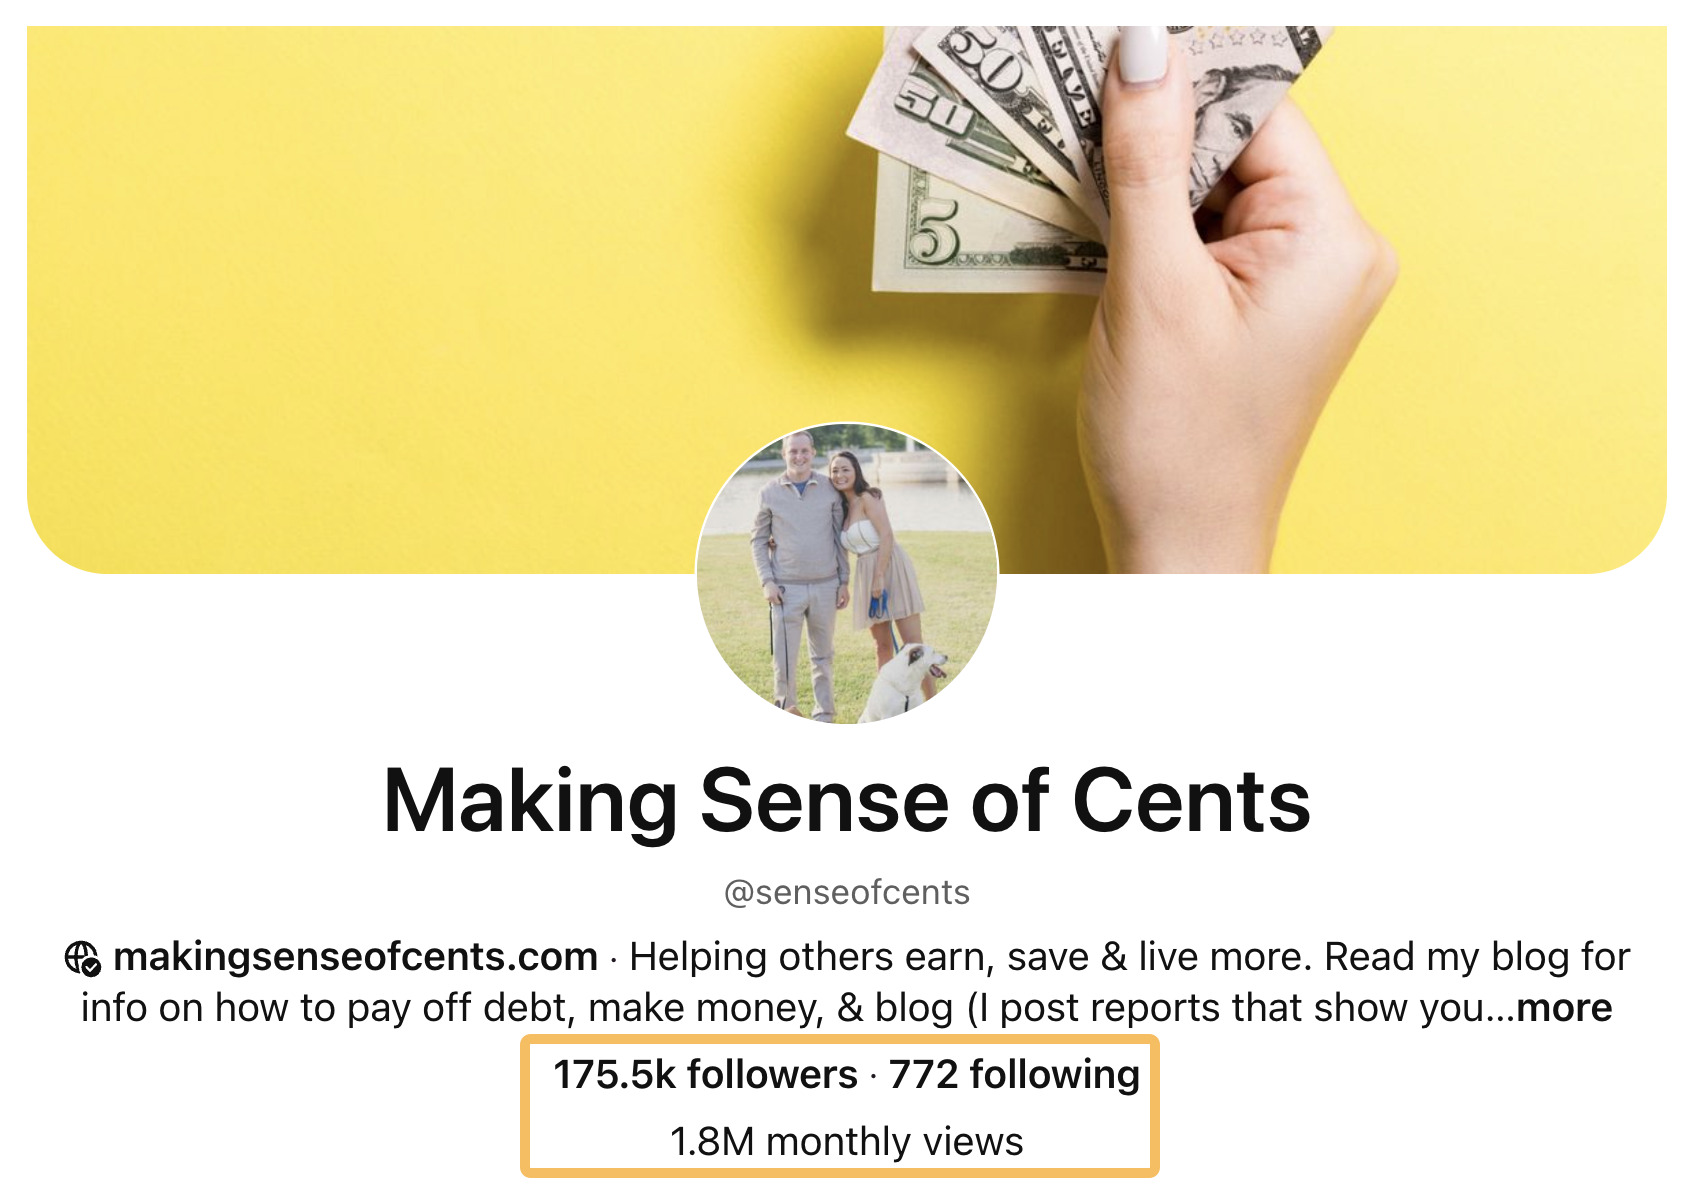 La cuenta de Pinterest de Making Sense of Cents